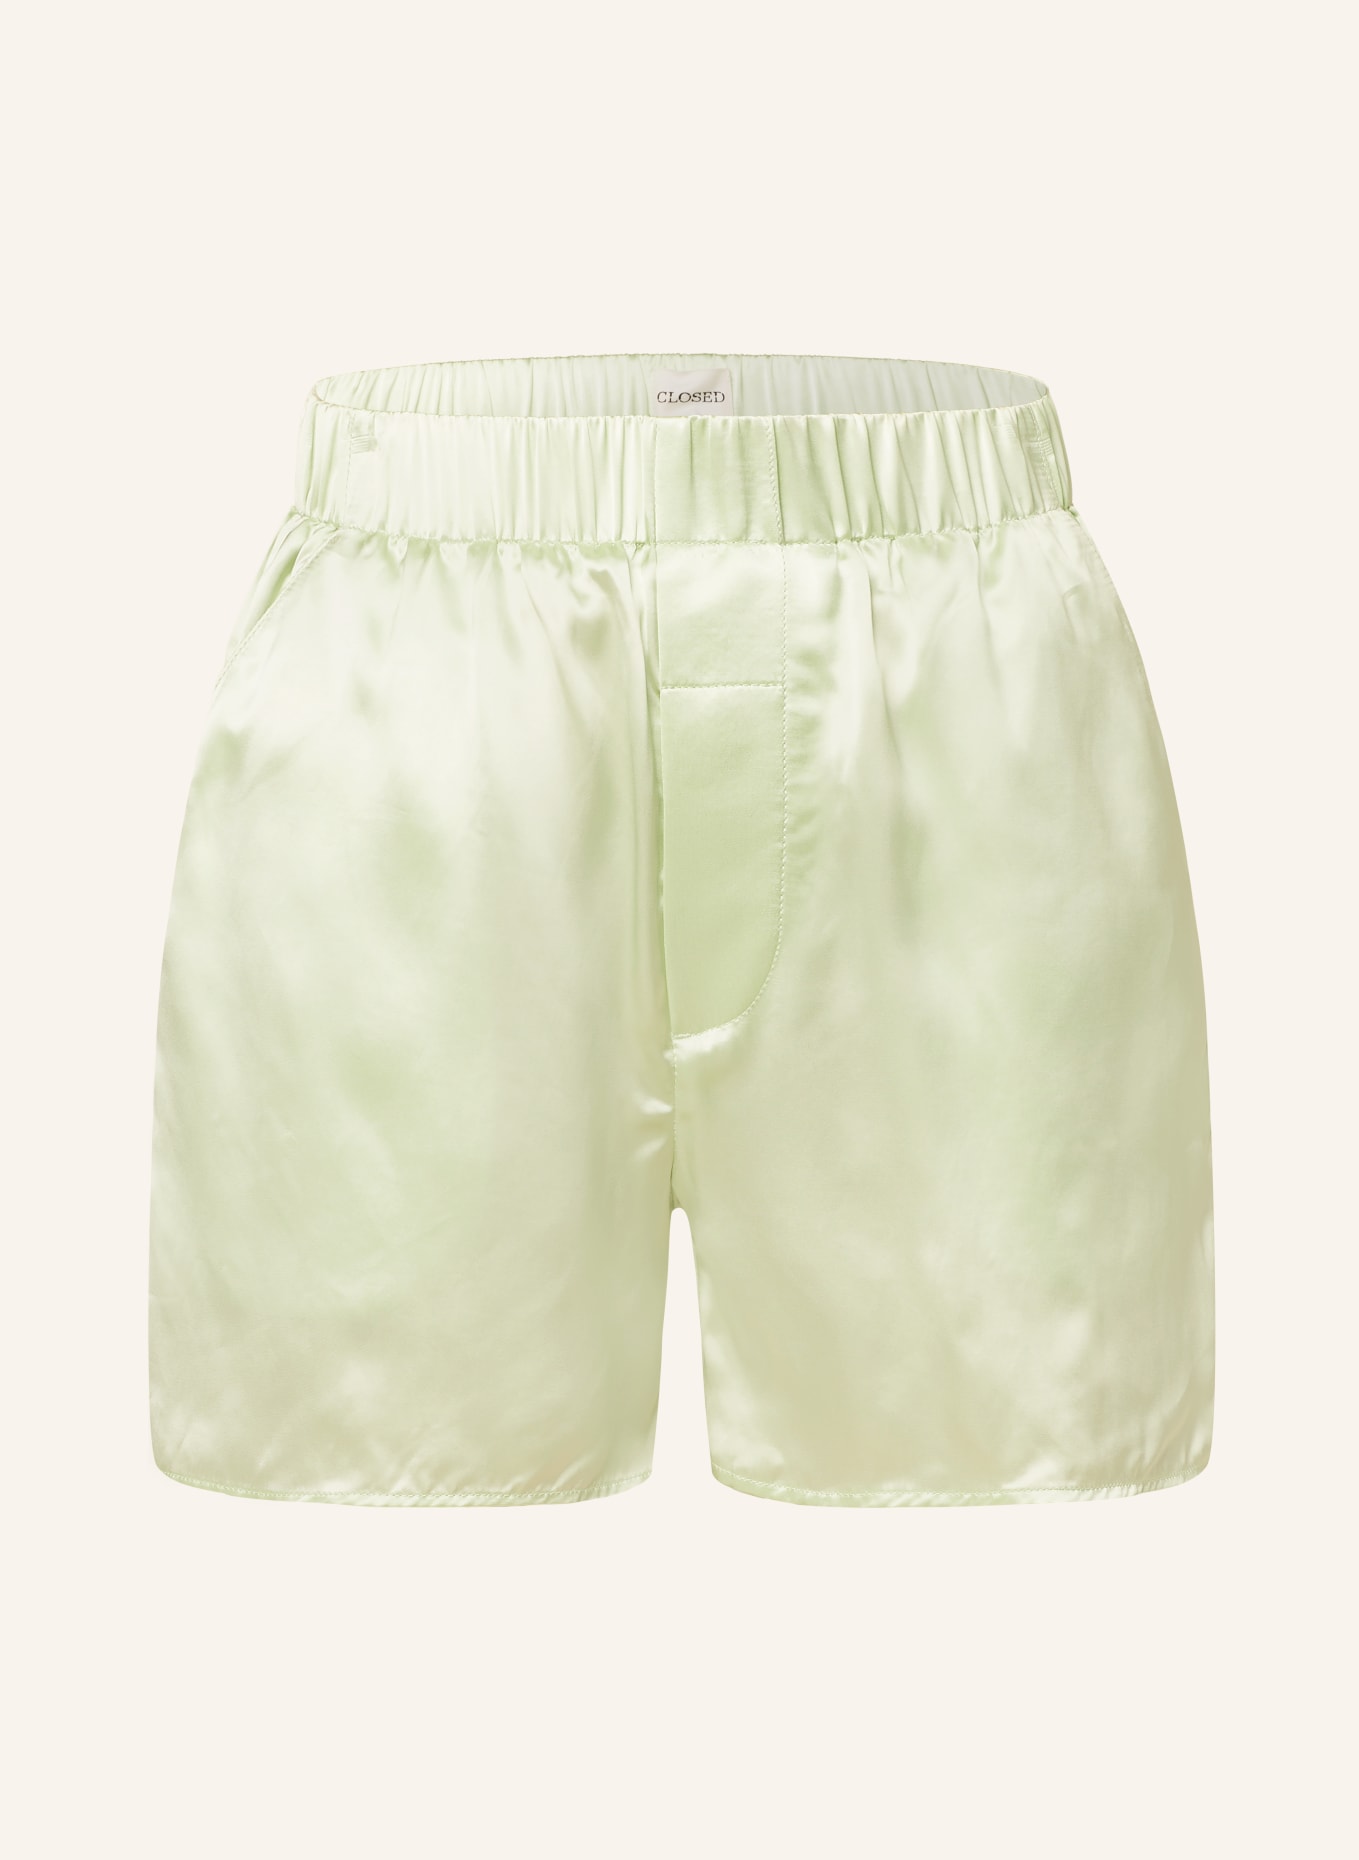 CLOSED Satin shorts, Color: MINT (Image 1)